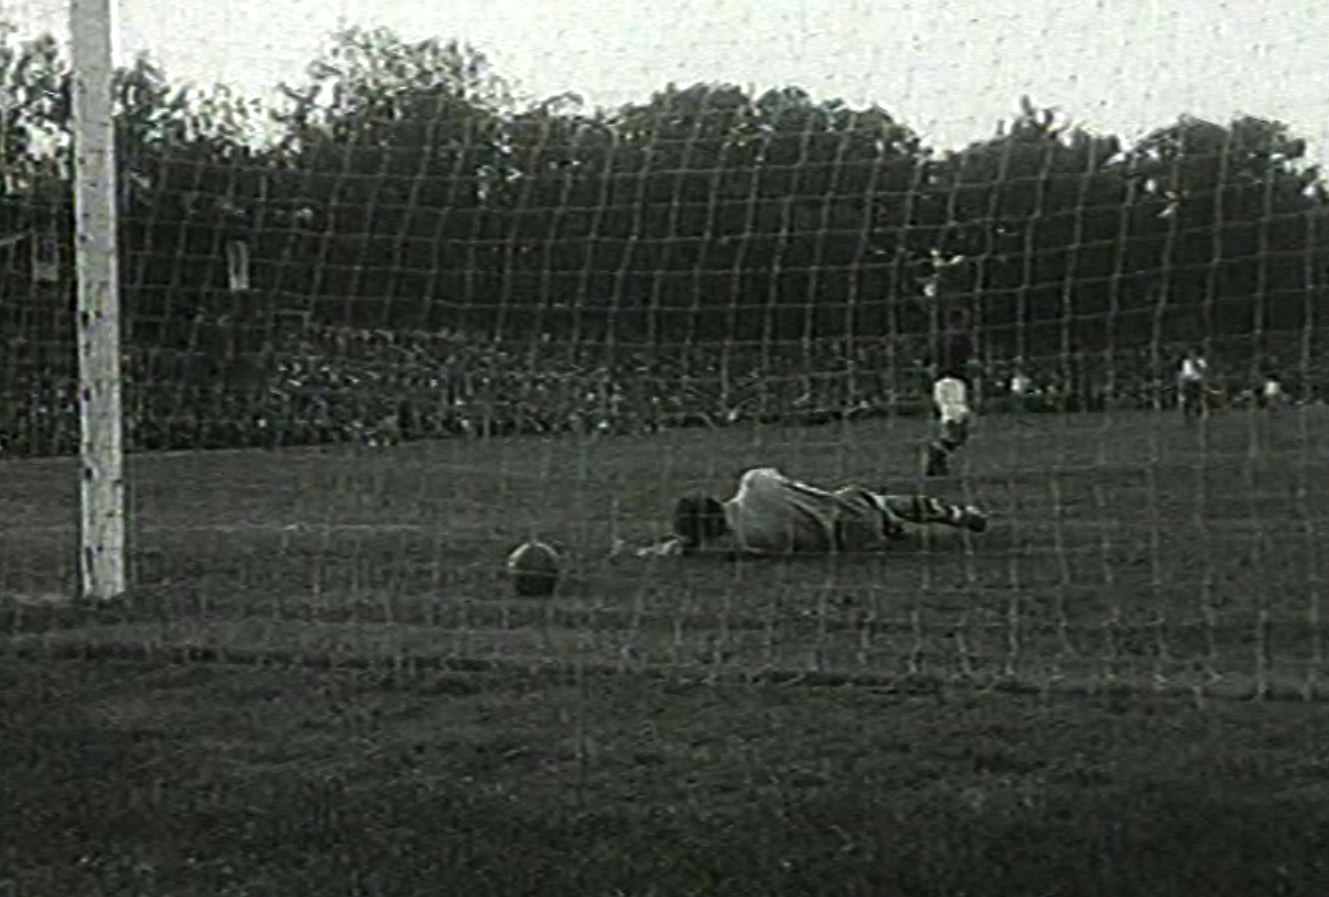 Węgry - Polska 8:2 (10.07.1949)